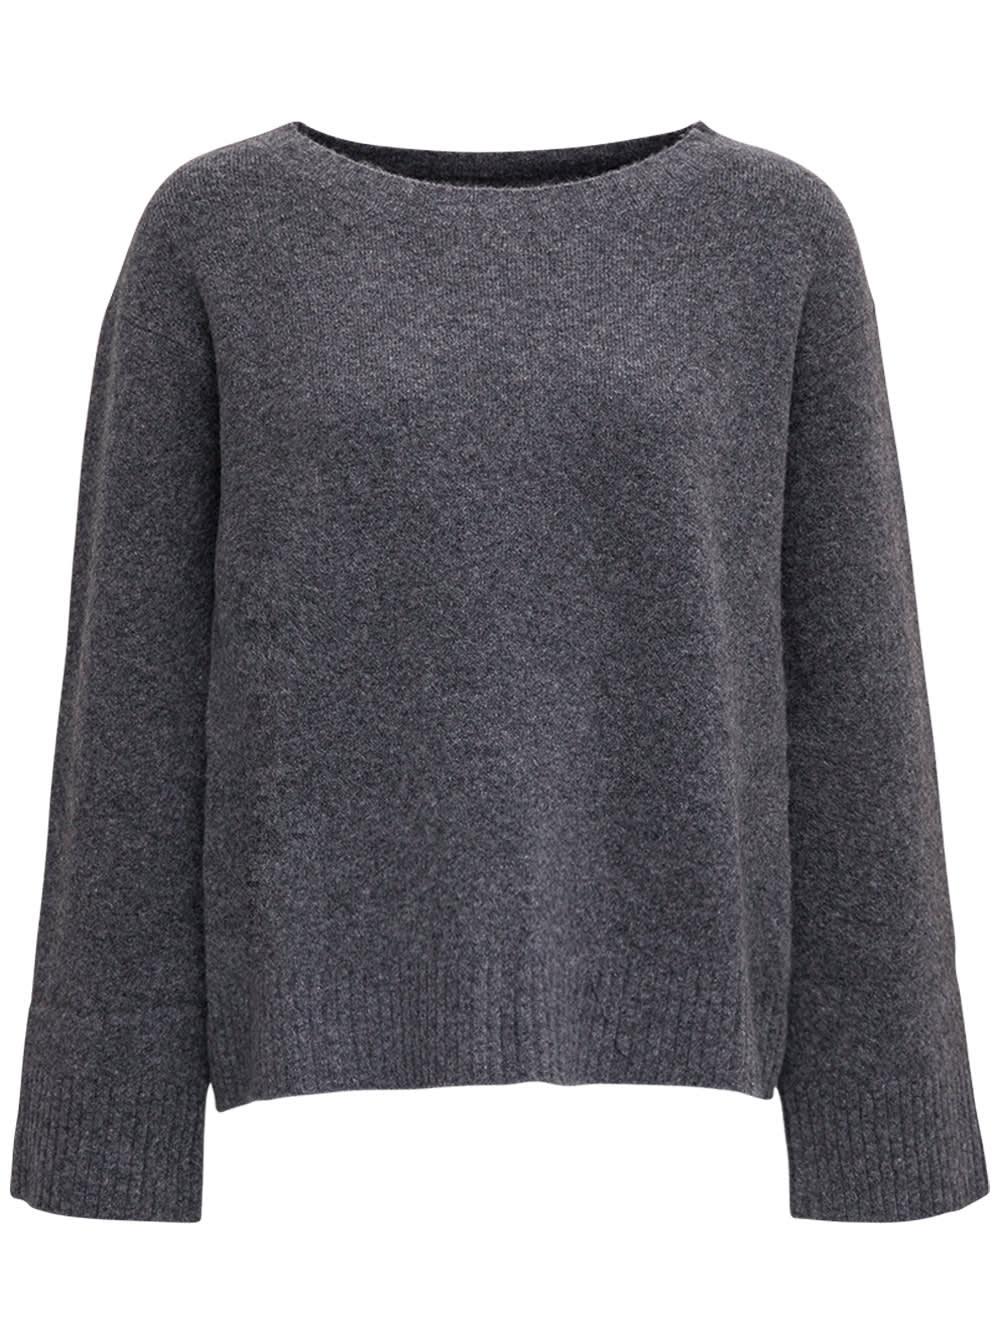 Max Mara Grey Wool Sweater With Boat Neckline